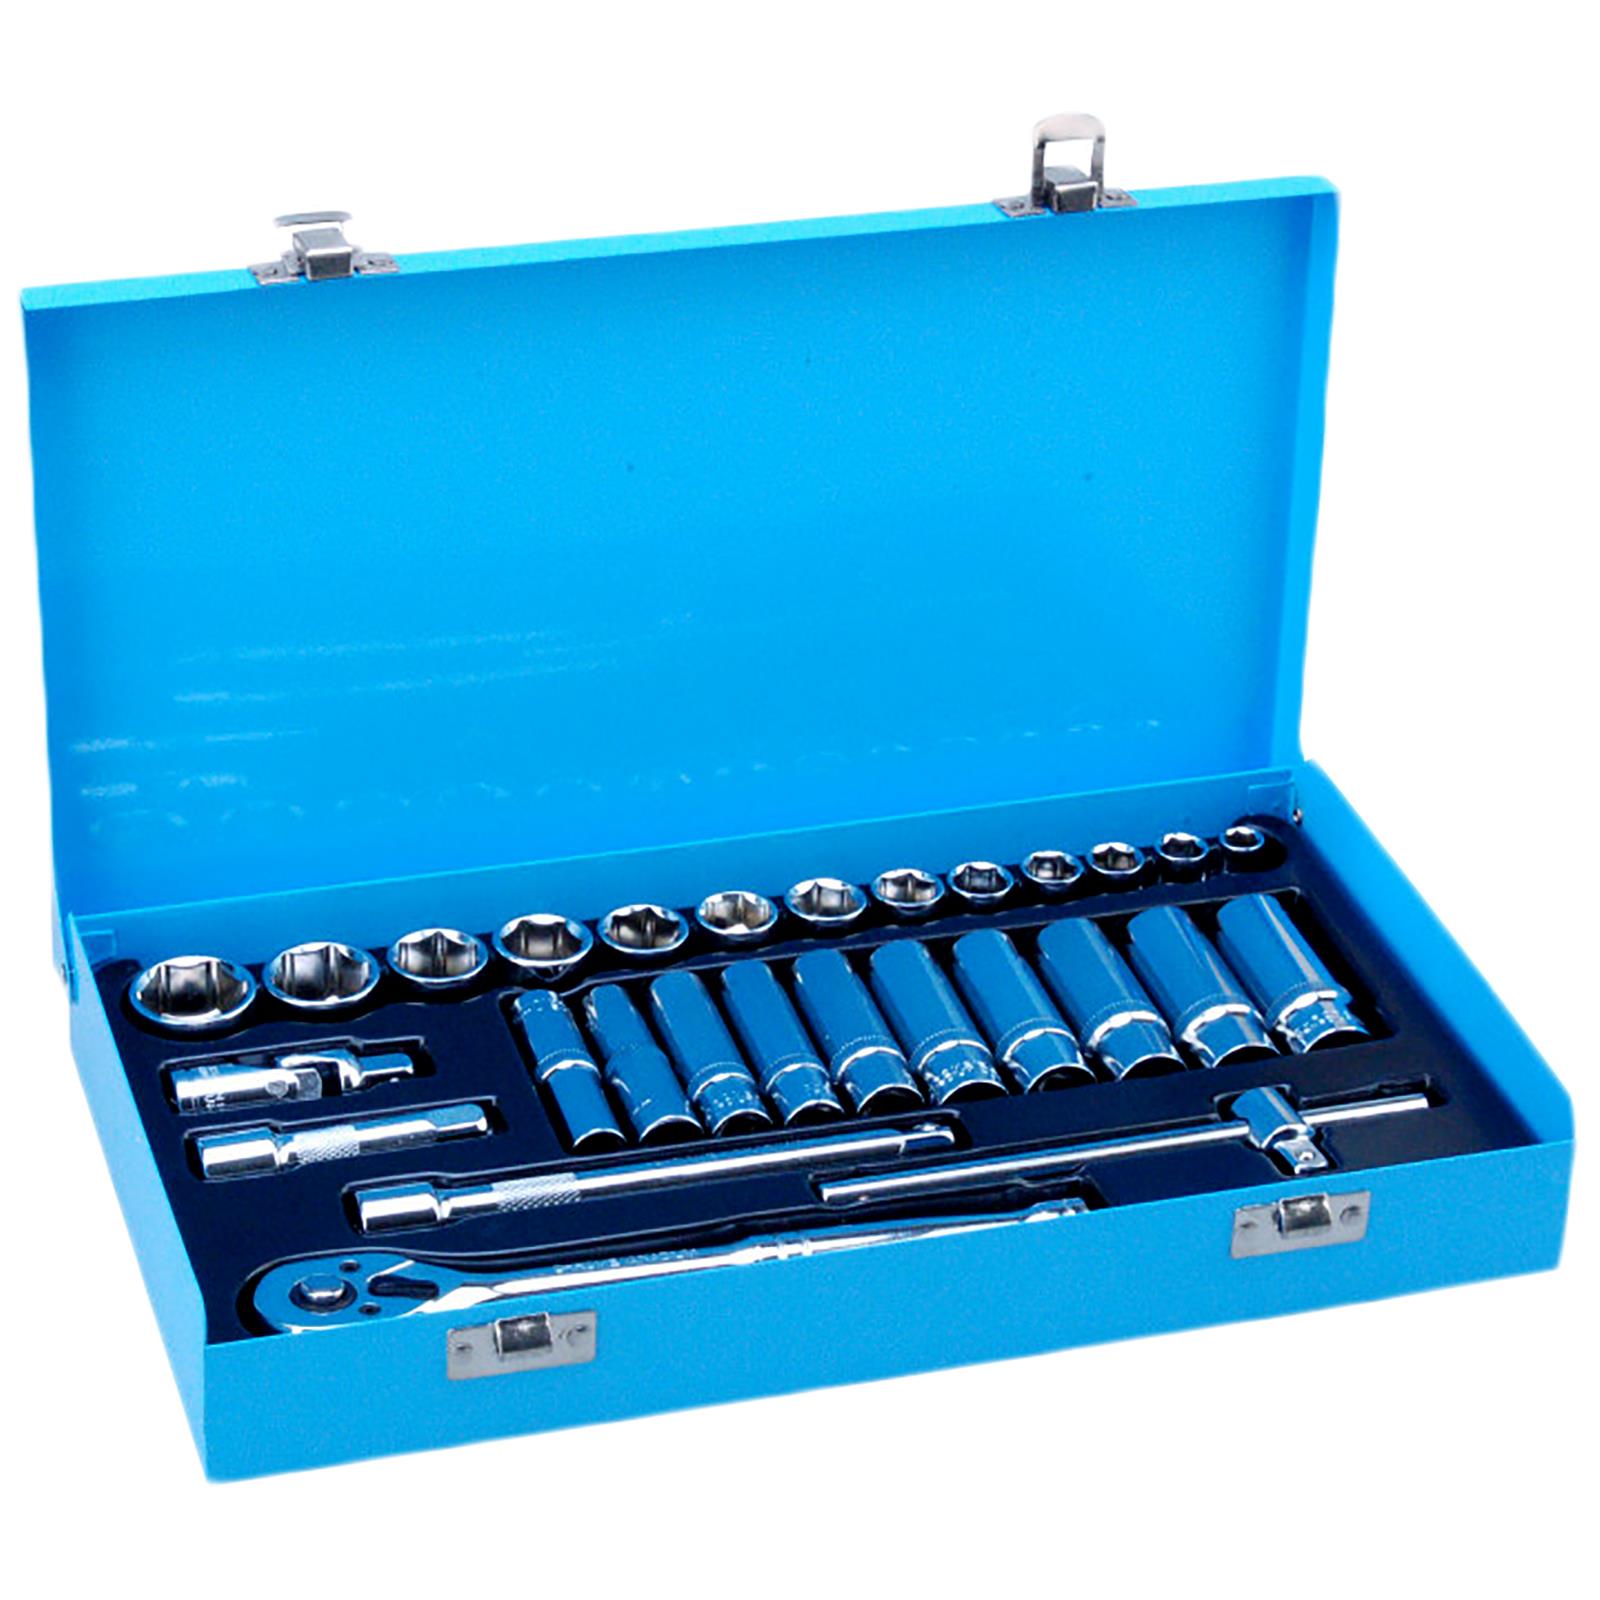 BlueSpot Metric Socket Set 3/8" Drive 28 Piece 8-24mm Metal Storage Case